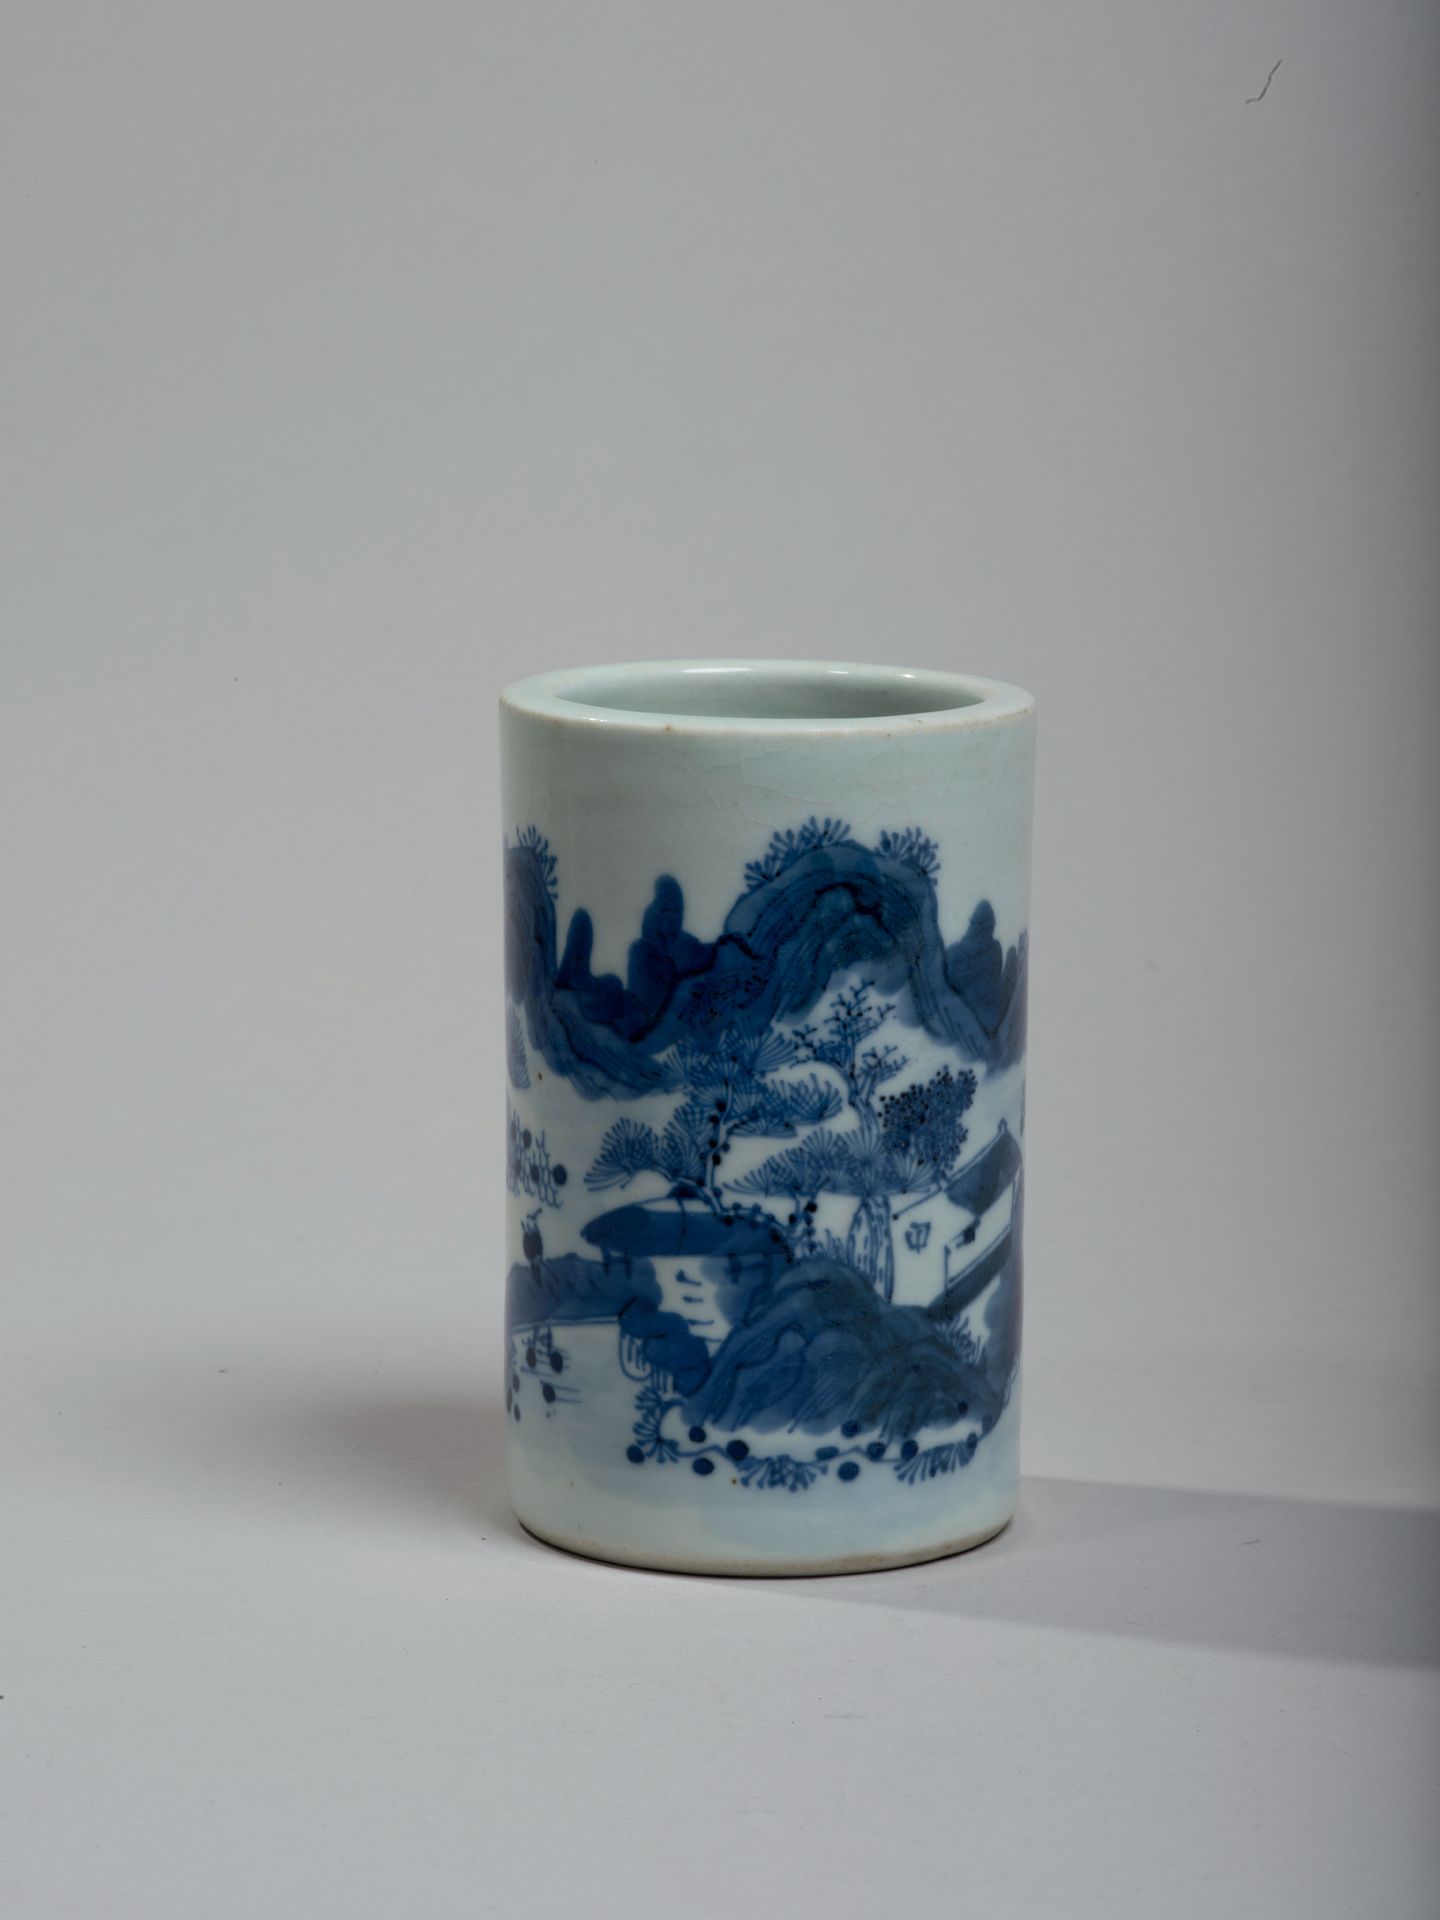 CHINE - XIXe siècle 
瓷器笔筒，蓝色釉下彩装饰的丘陵风景。高11厘米。